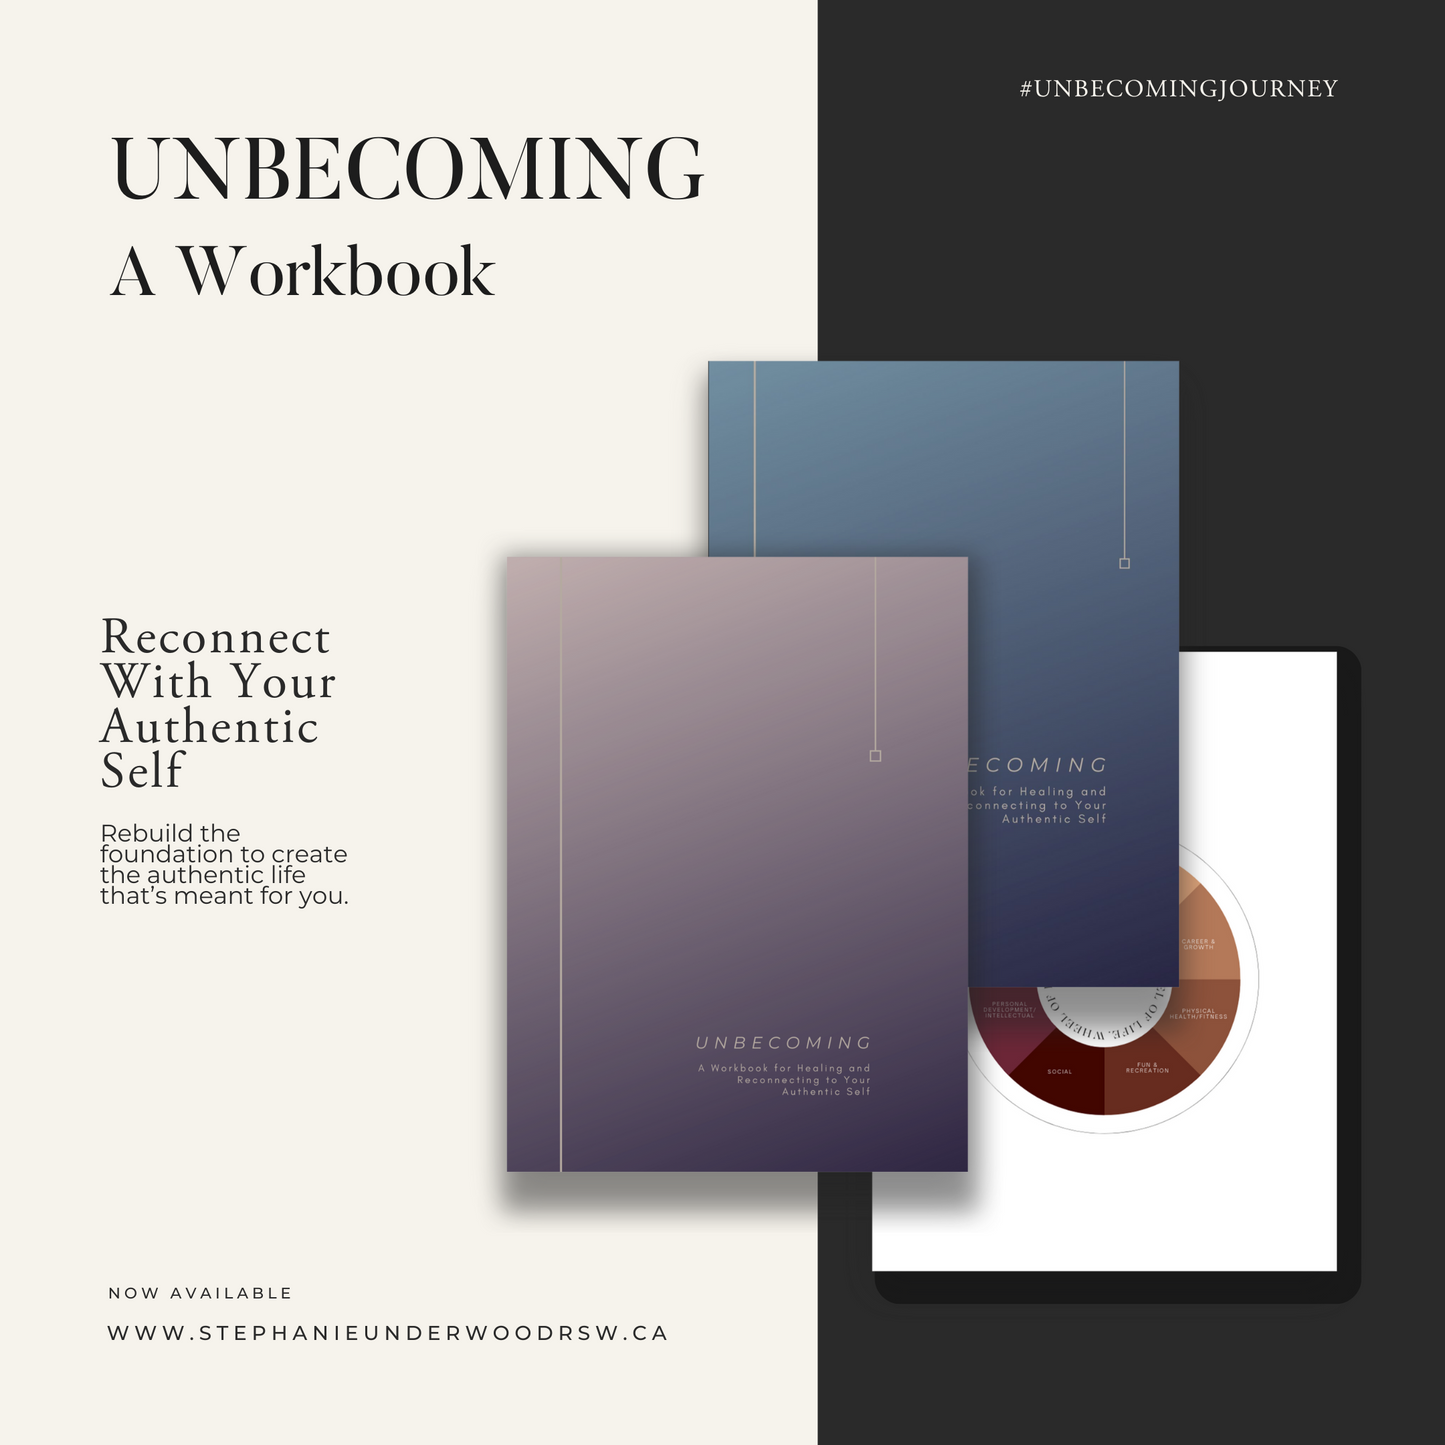 Unbecoming: A Digital Workbook | Purple Cover | Inner Child Healing